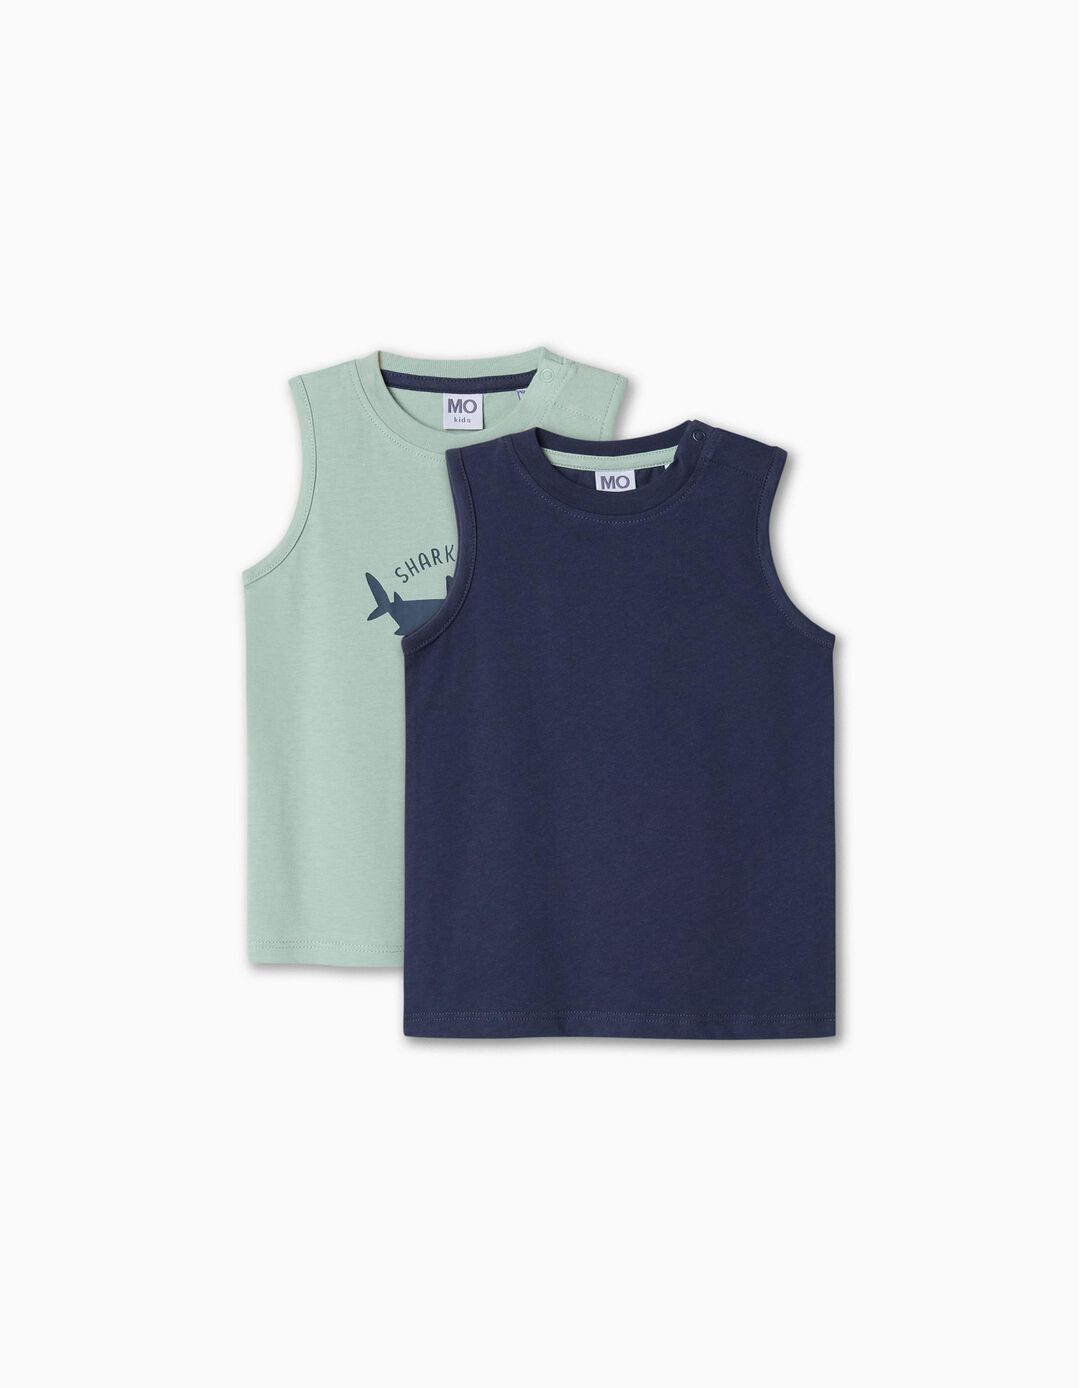 Pack 2 T-shirts sem Mangas, Bebé Menino, Azul Escuro/Verde Claro